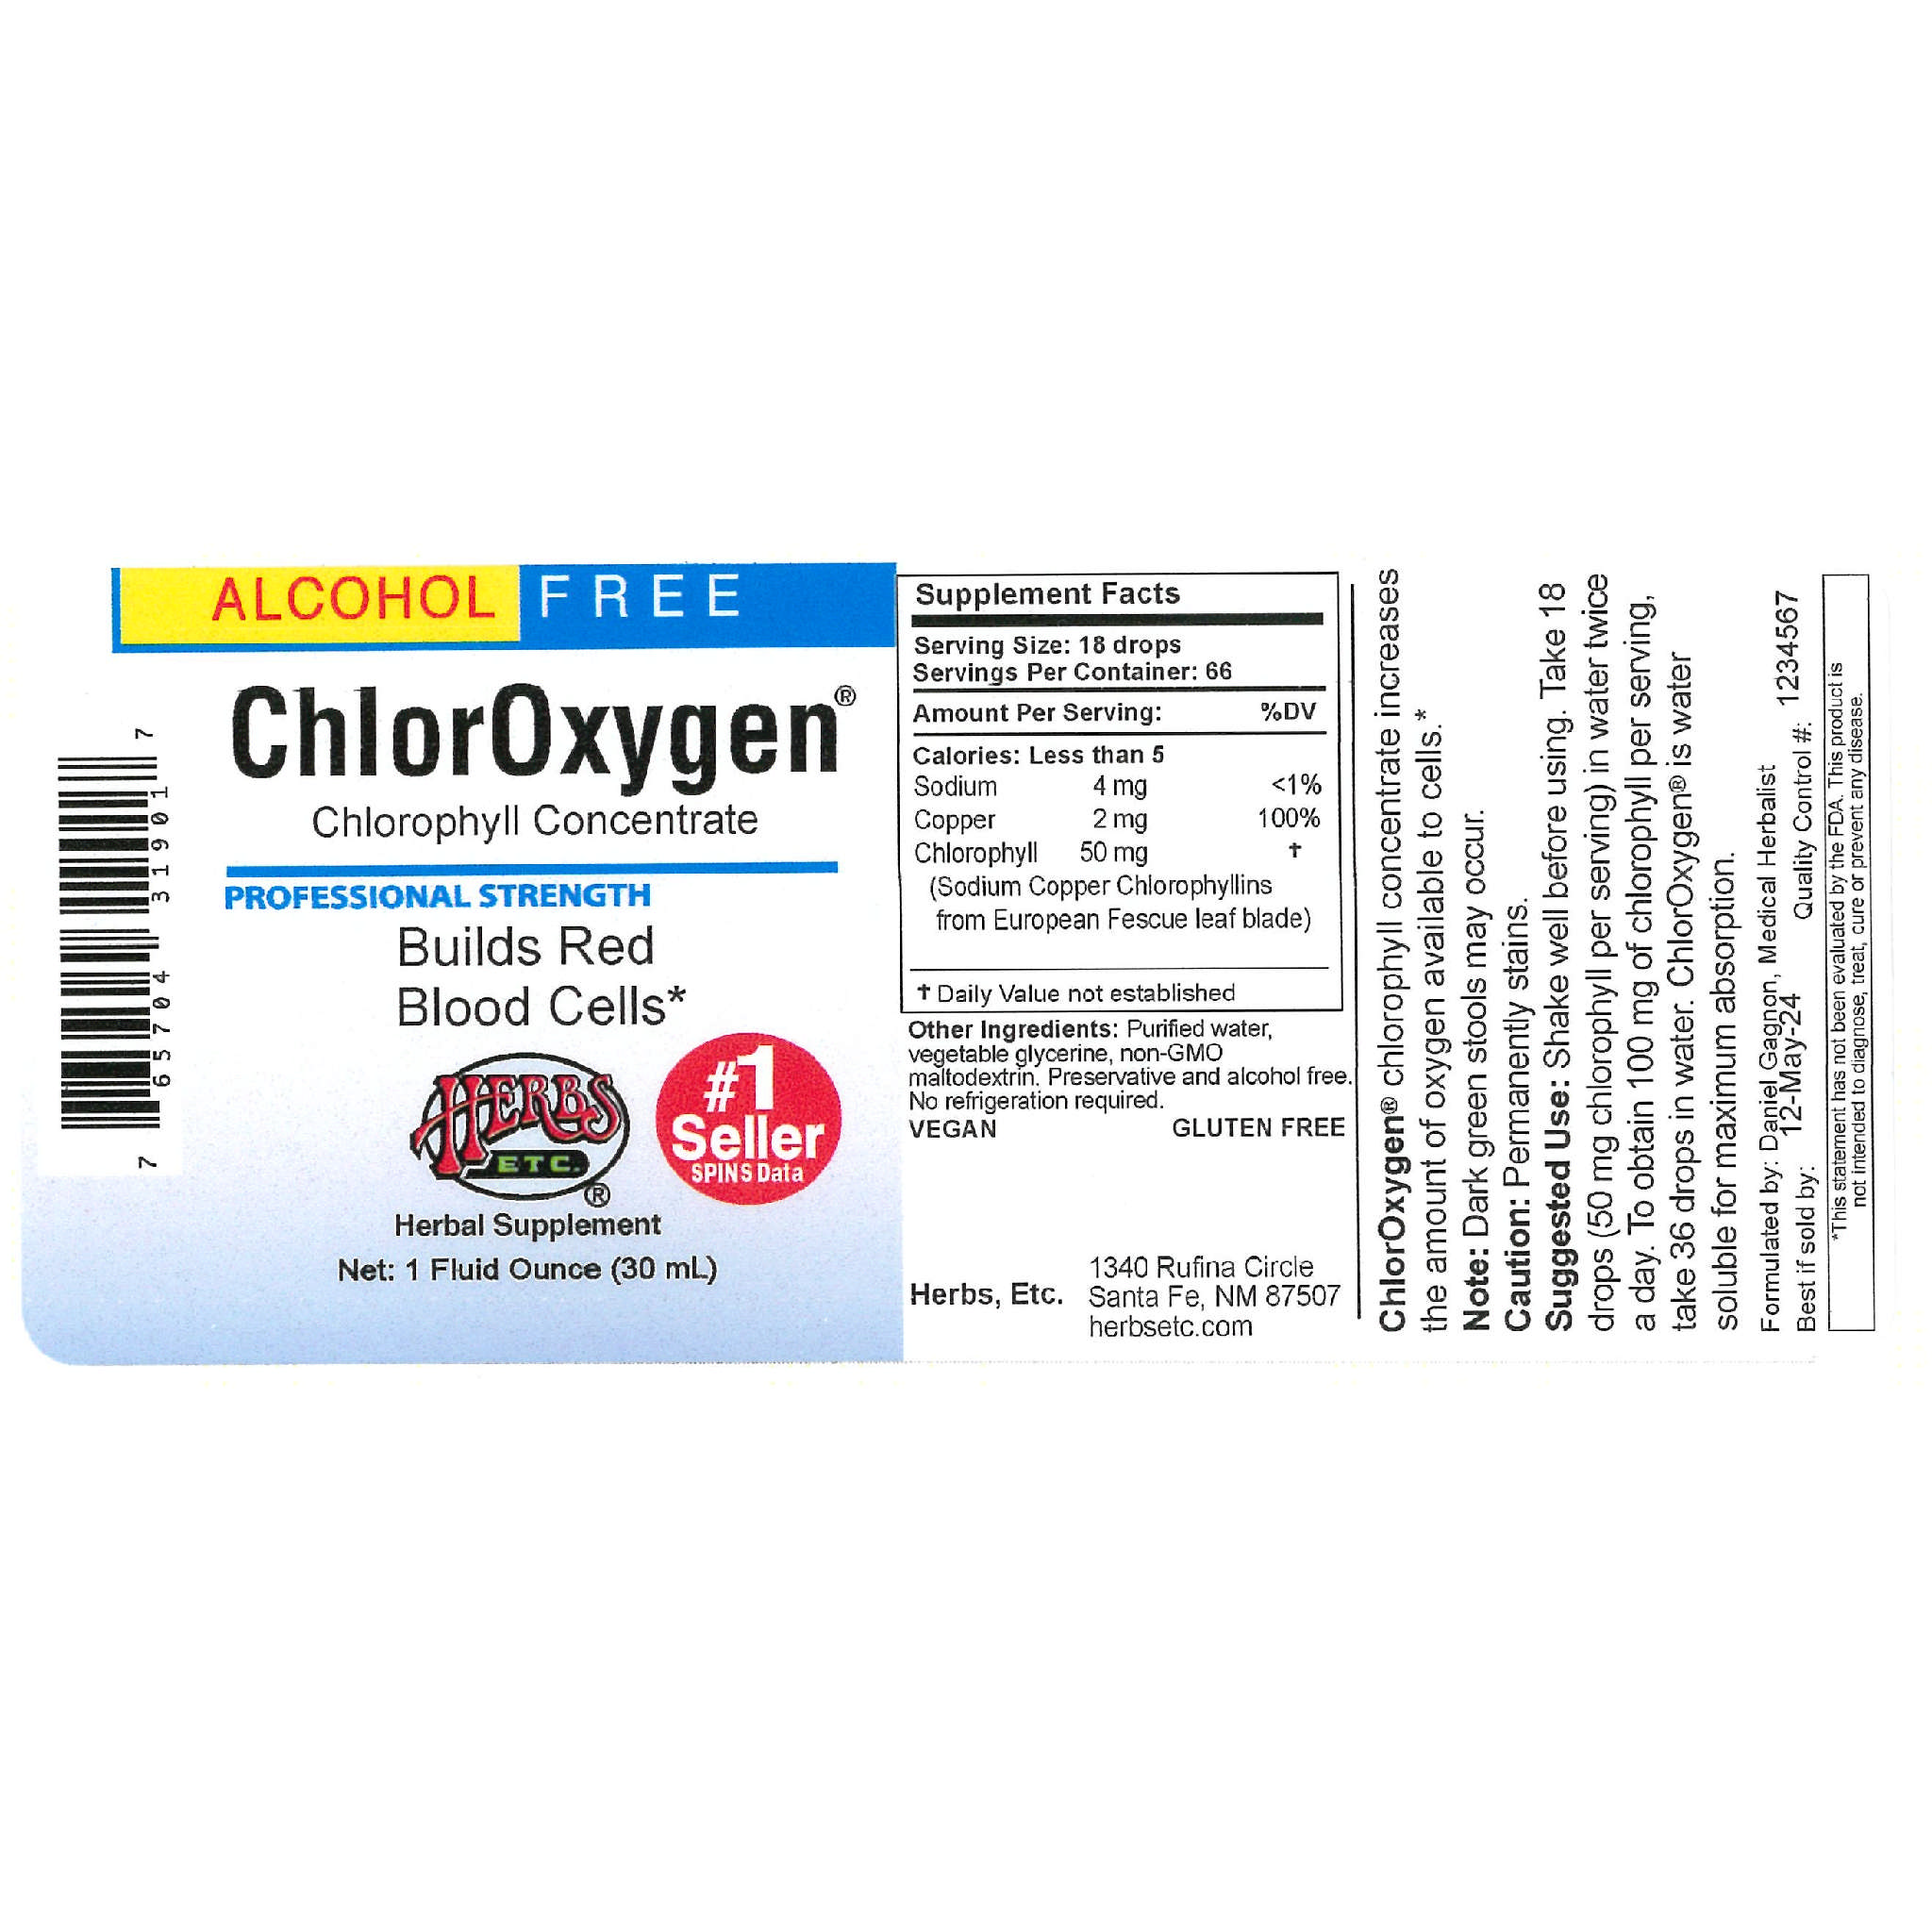 Herbs Etc - Chloroxygen A/F